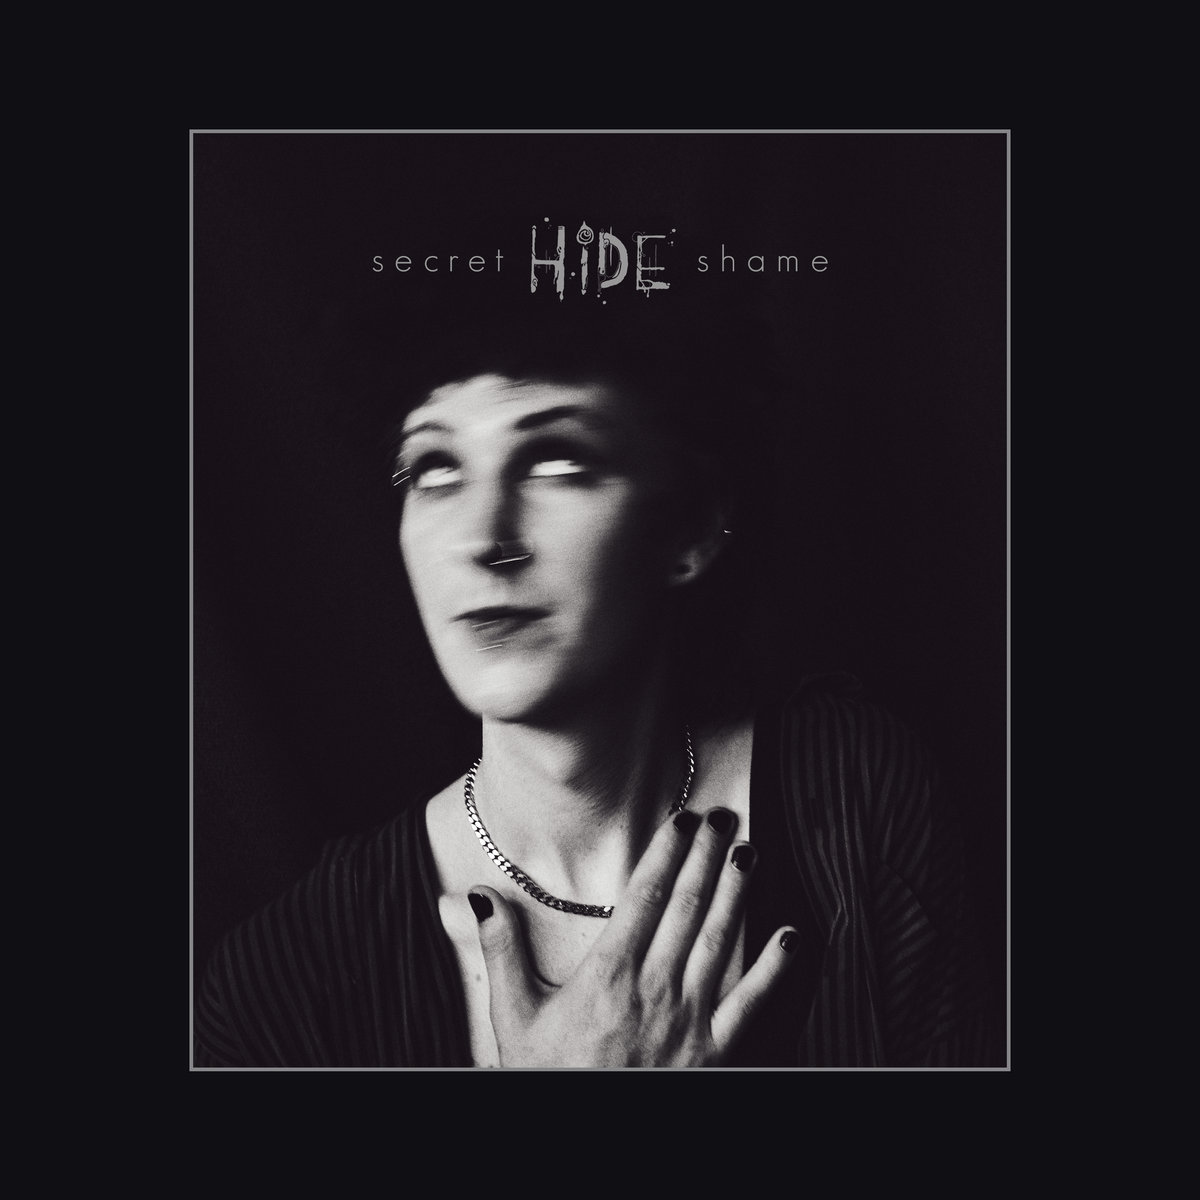 secret shame hide single cover - black and white portrait photo of a person